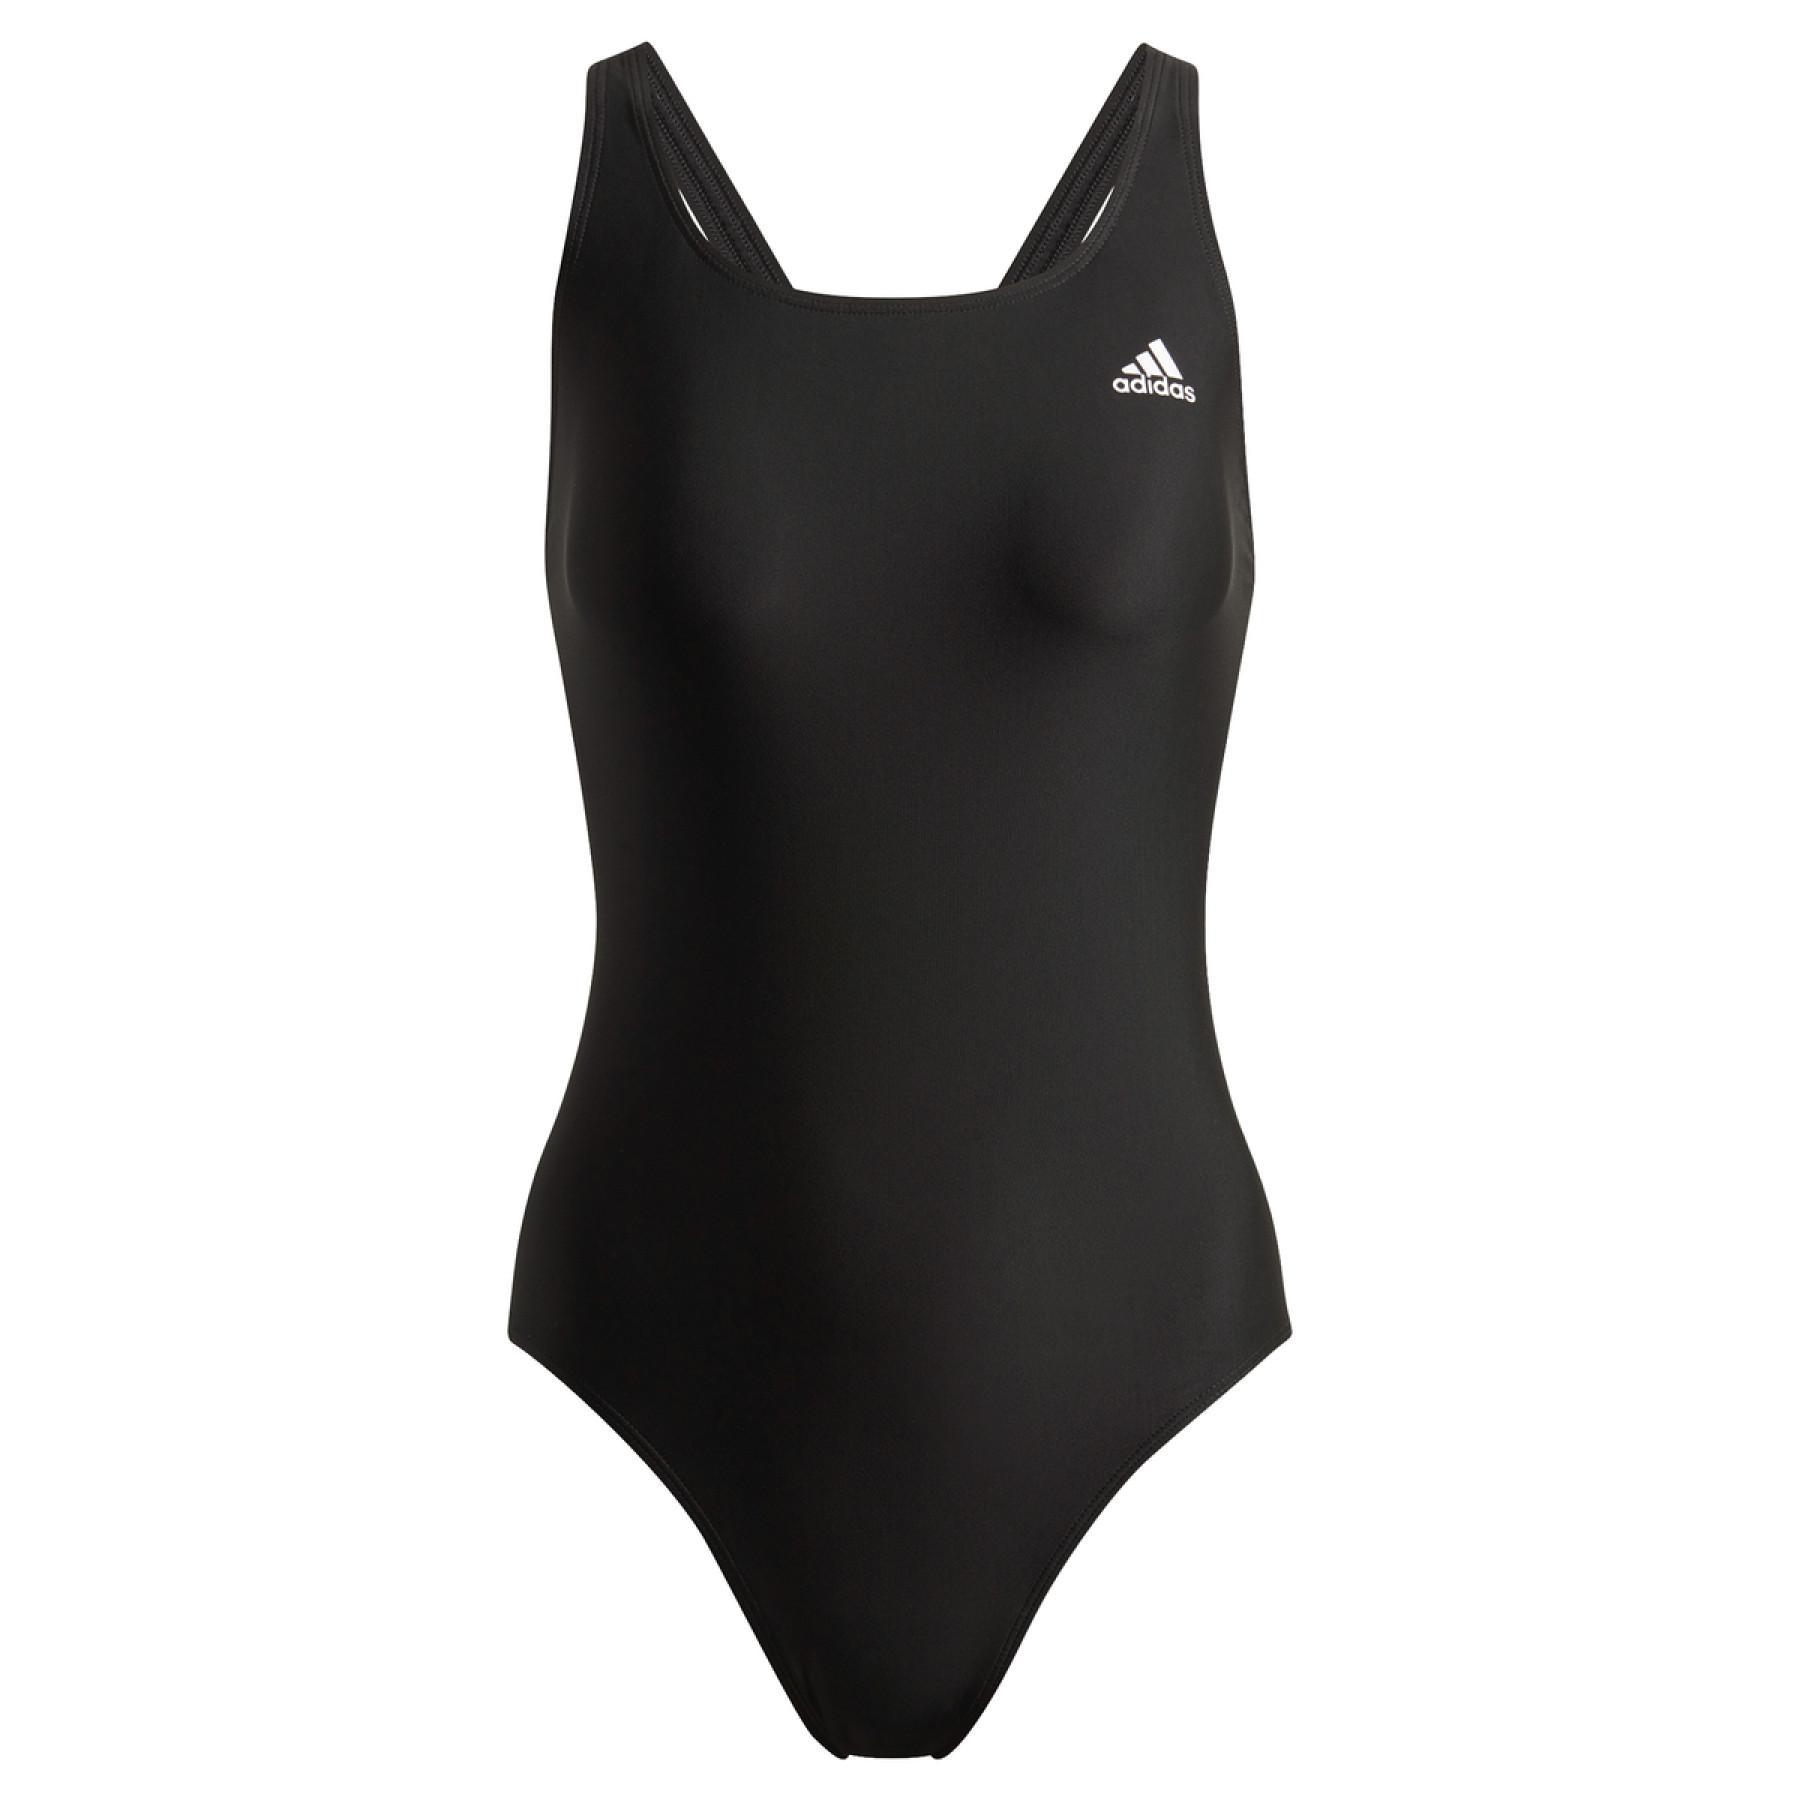 Women's swimsuit adidas SH3.RO Solid